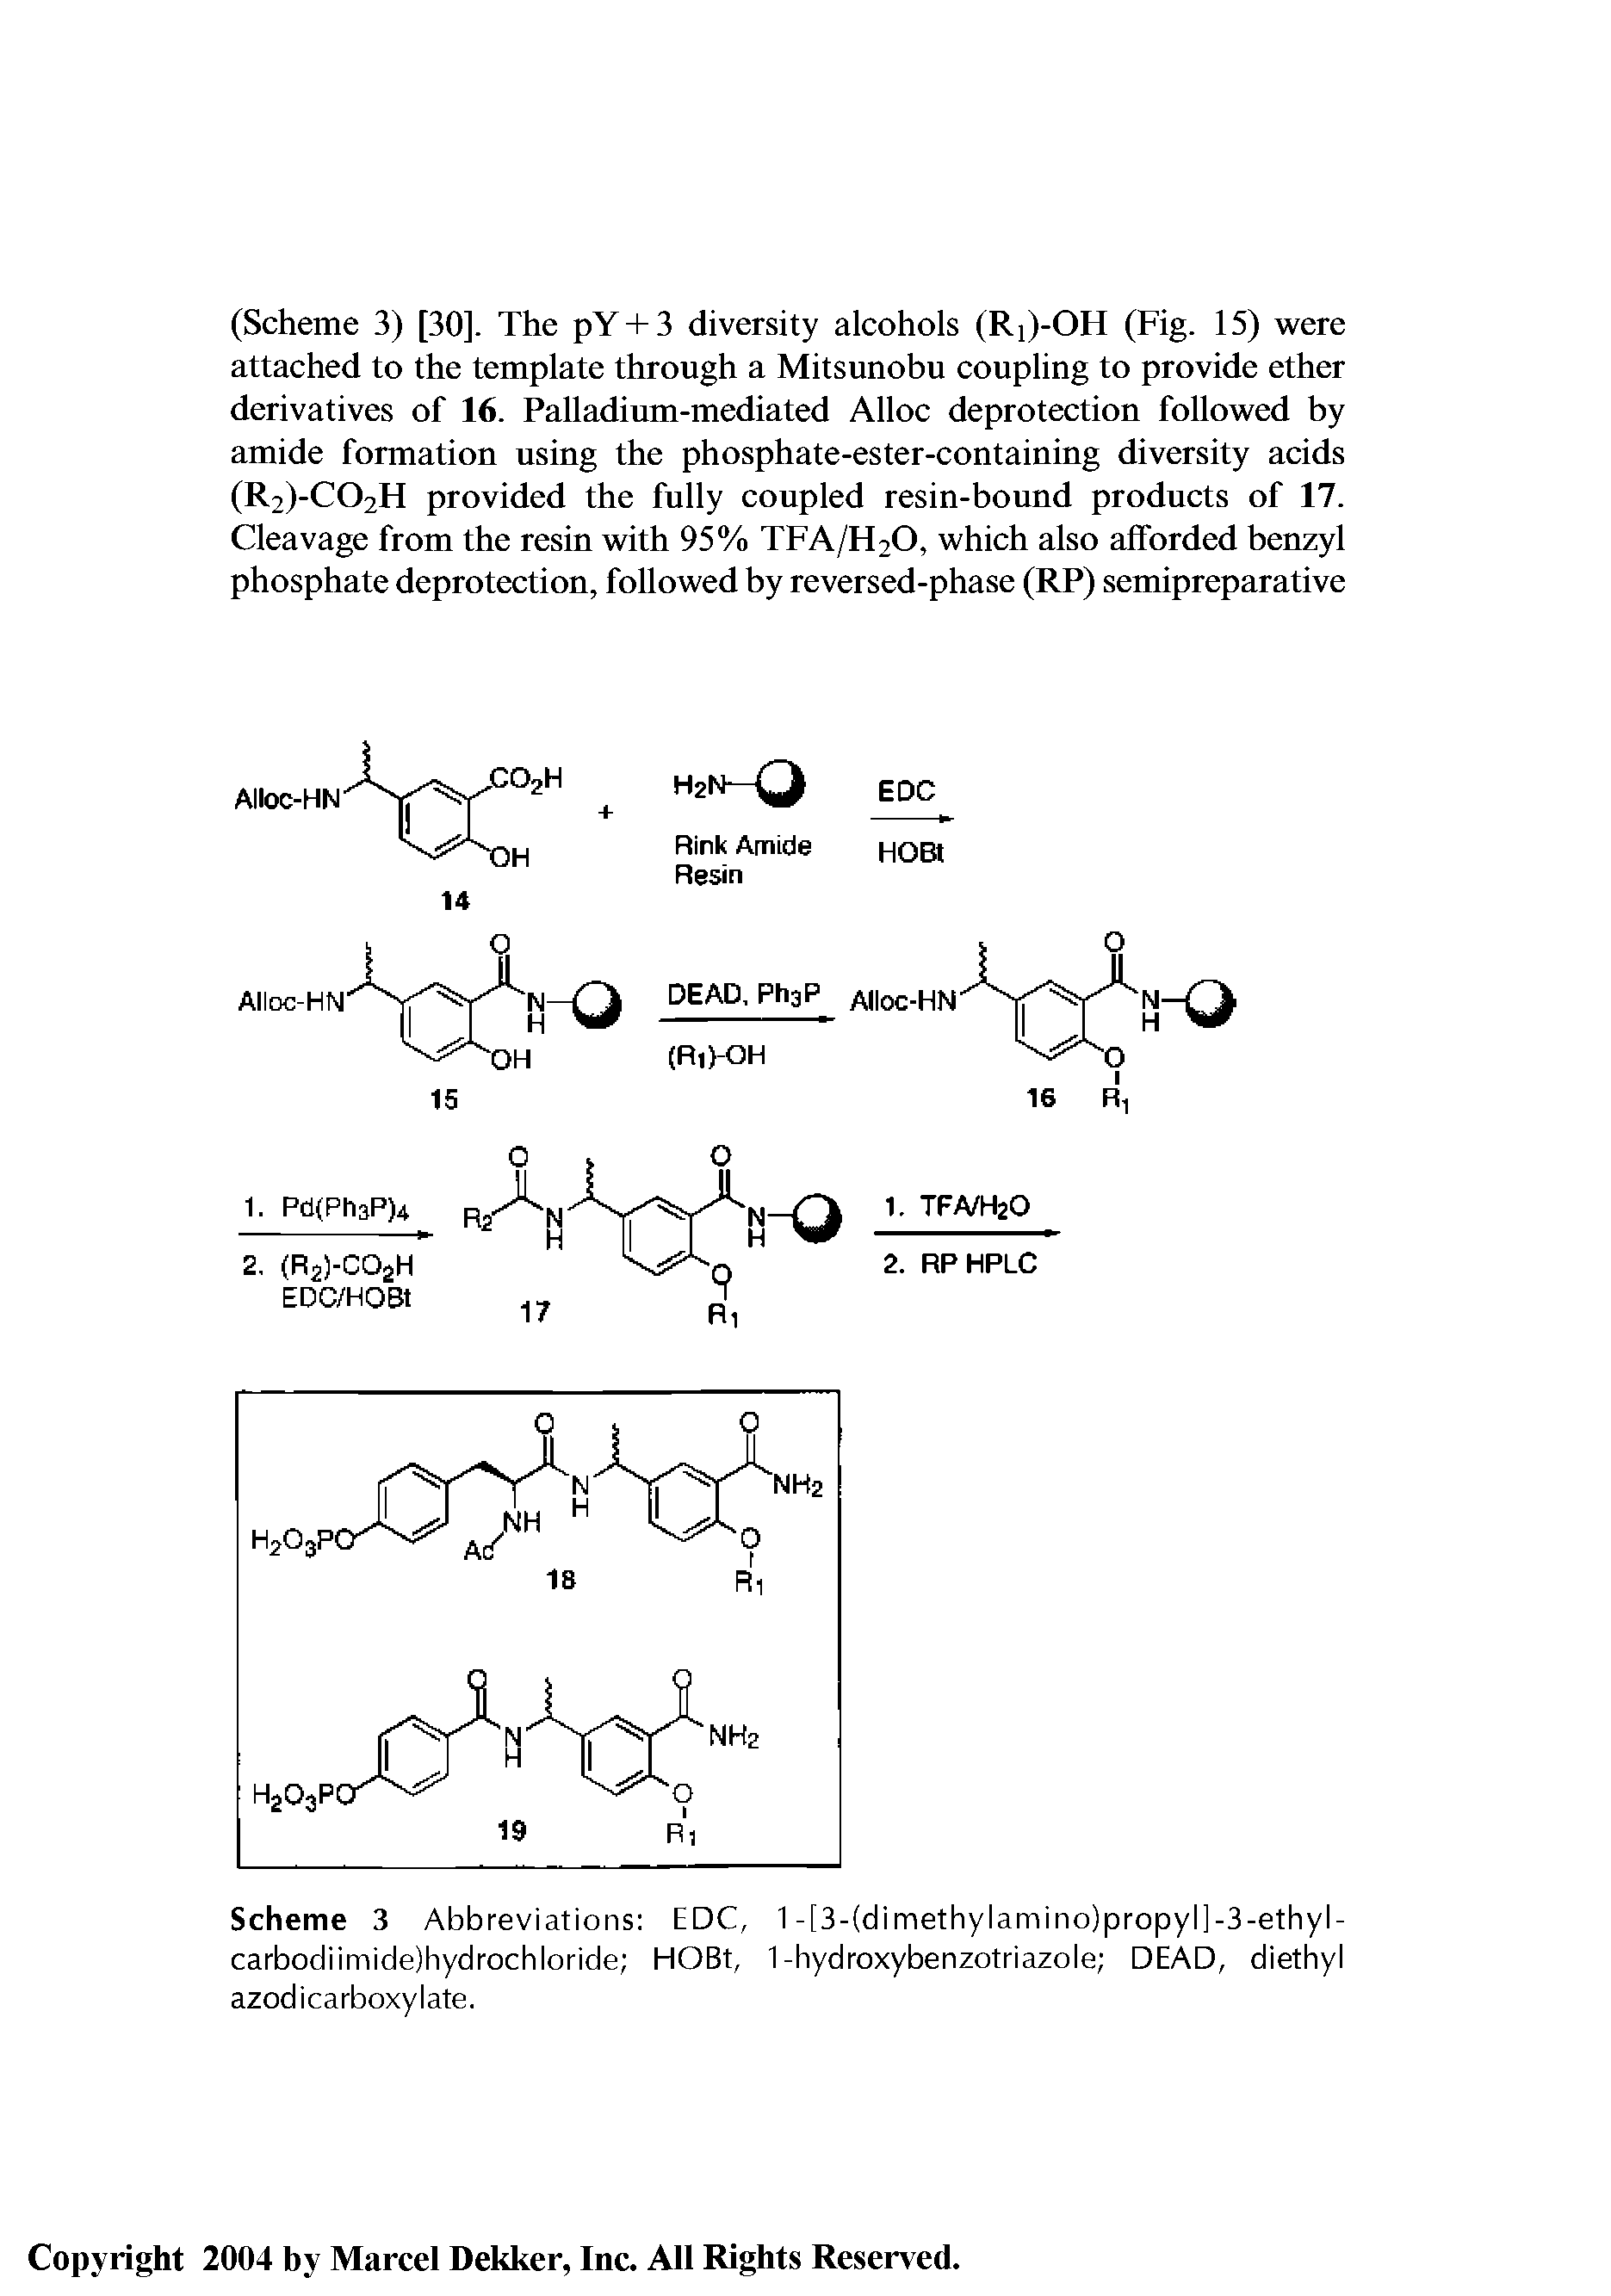 Scheme 3 Abbreviations EDC, 1-[3-(dimethylamino)propyl]-3-ethyl-carbodiimidejhydrochloride HOBt, 1-hydroxybenzotriazole DEAD, diethyl azodicarboxylate.